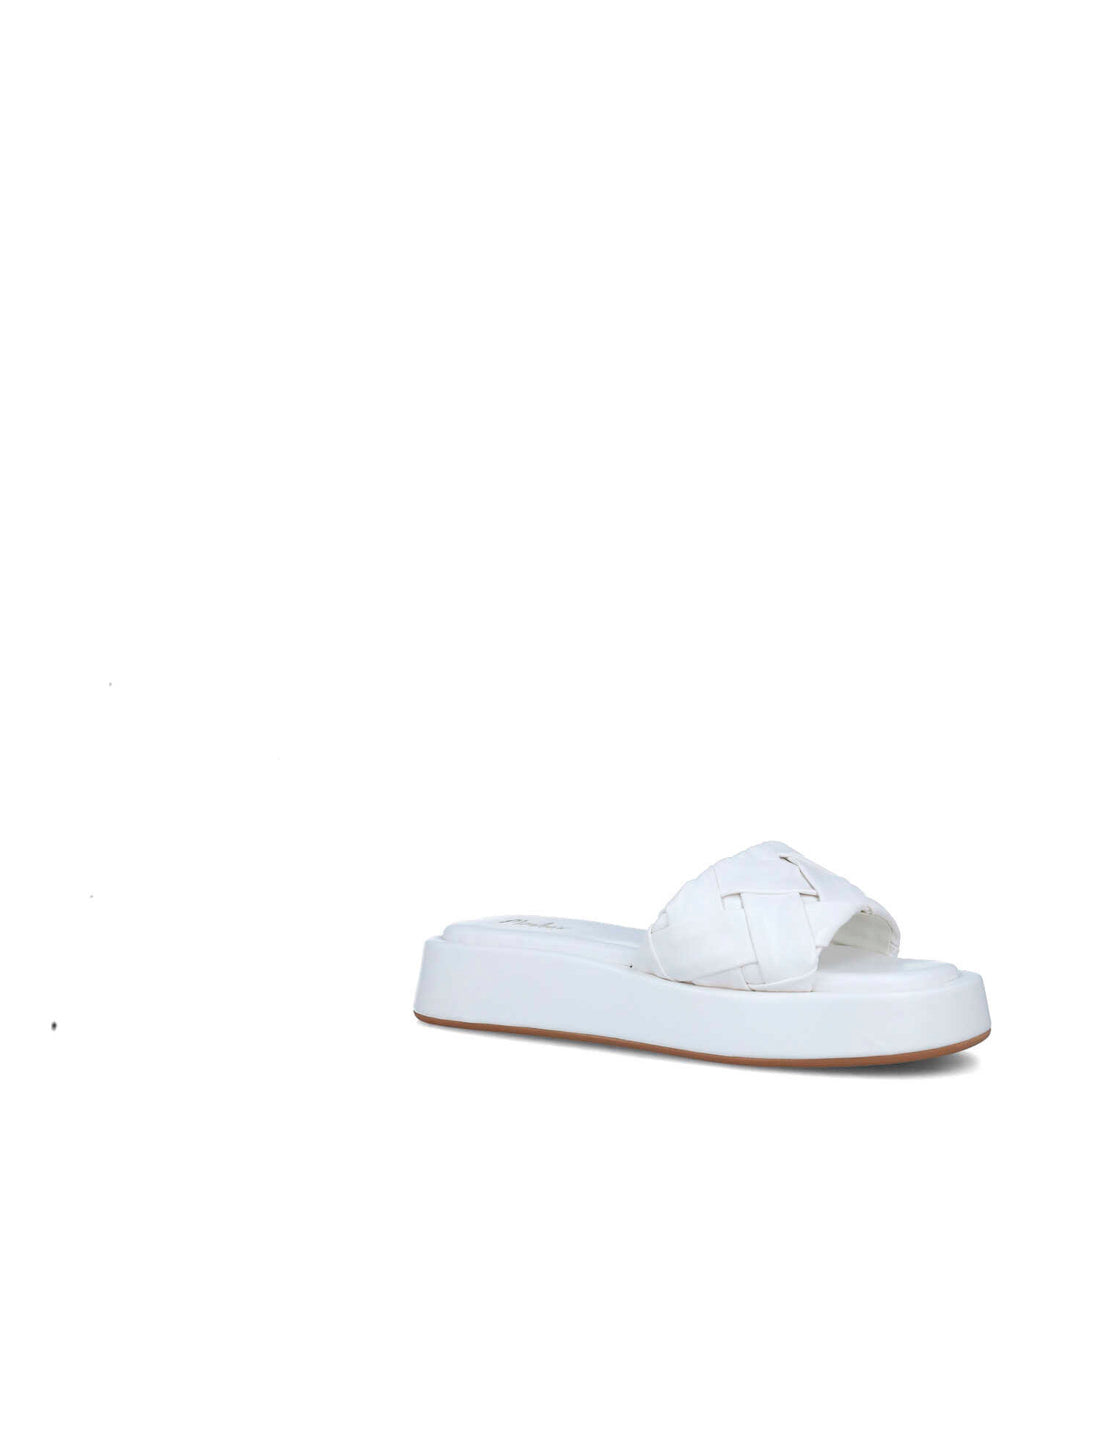 White Platform Slippers_25561_06_02